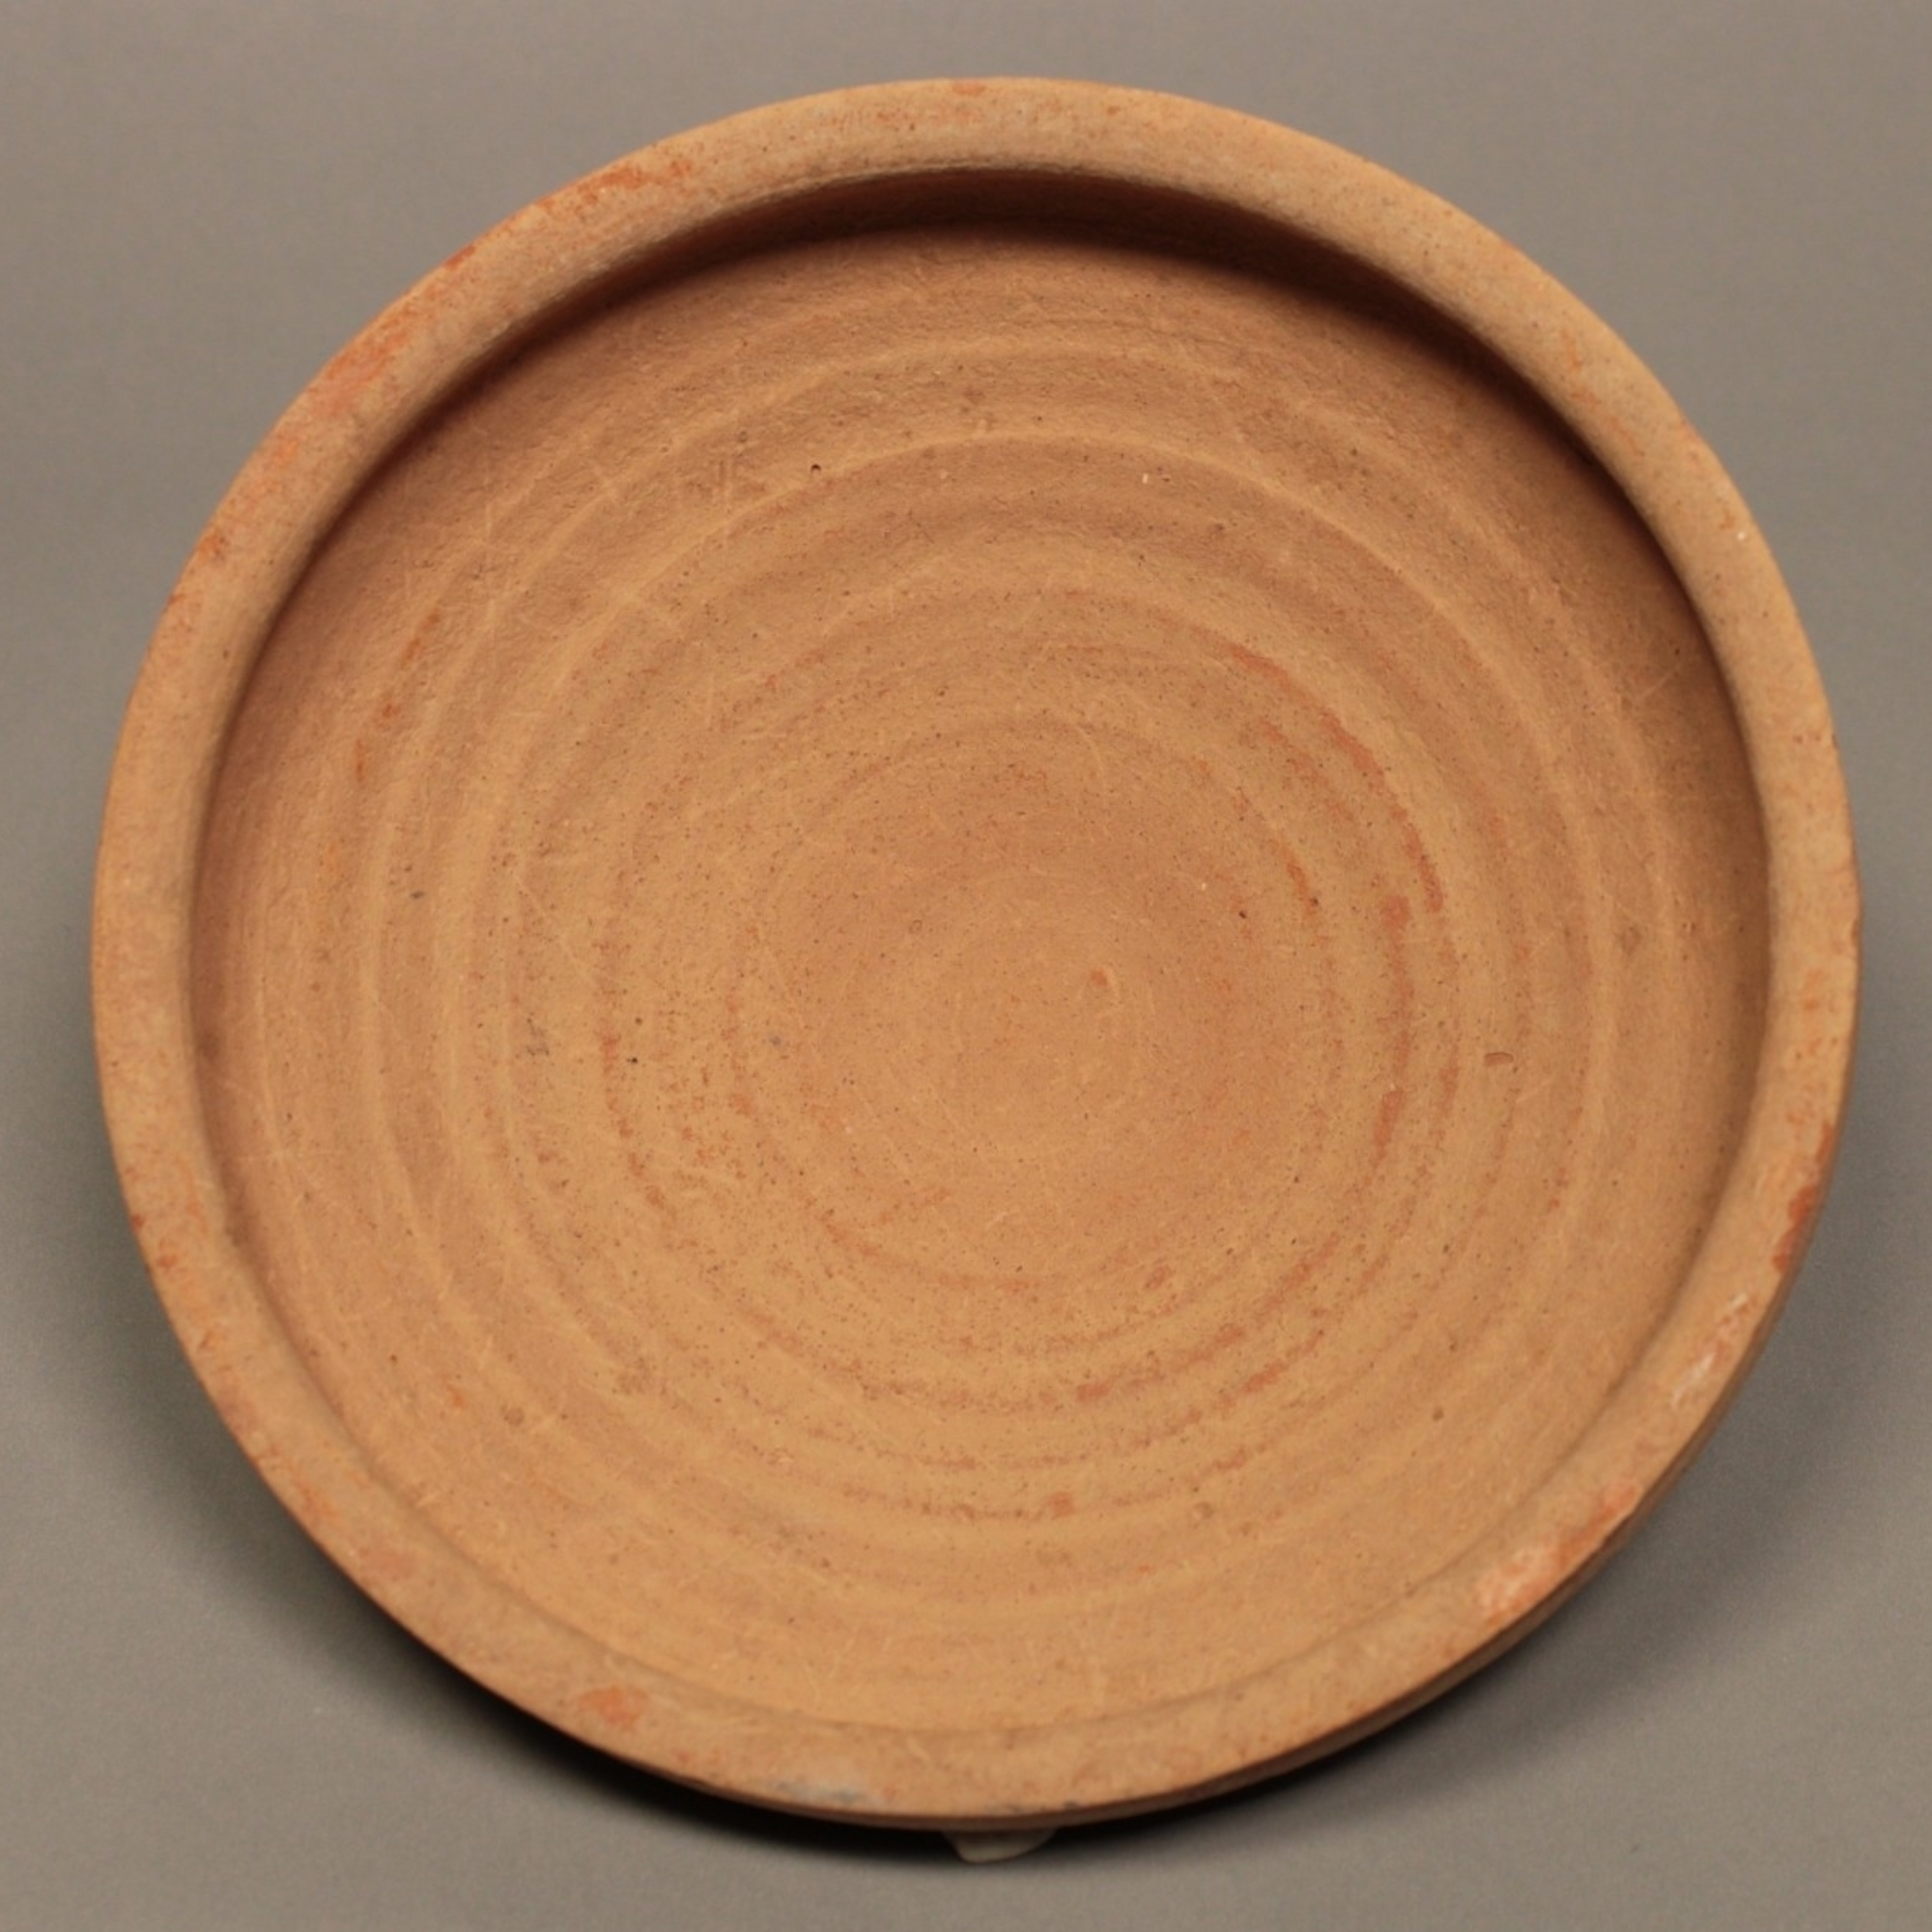 Roman Terracota Buffware Bowl, 6.0 inch - c. 1 to 400 CE - Roman Empire - 10/10/23 Auction